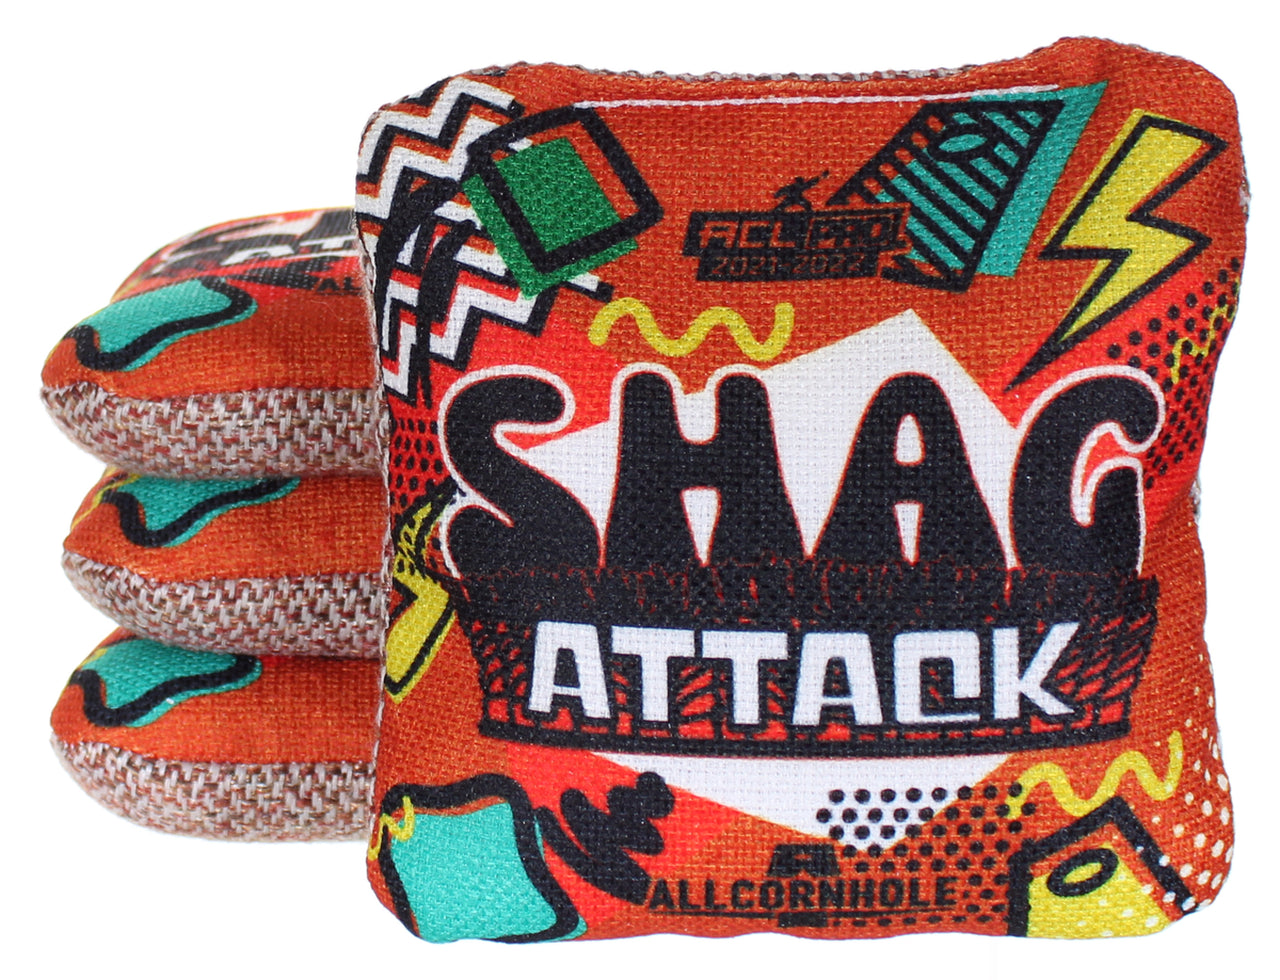 Shag Attack Carpet Bags - (Set of 4)